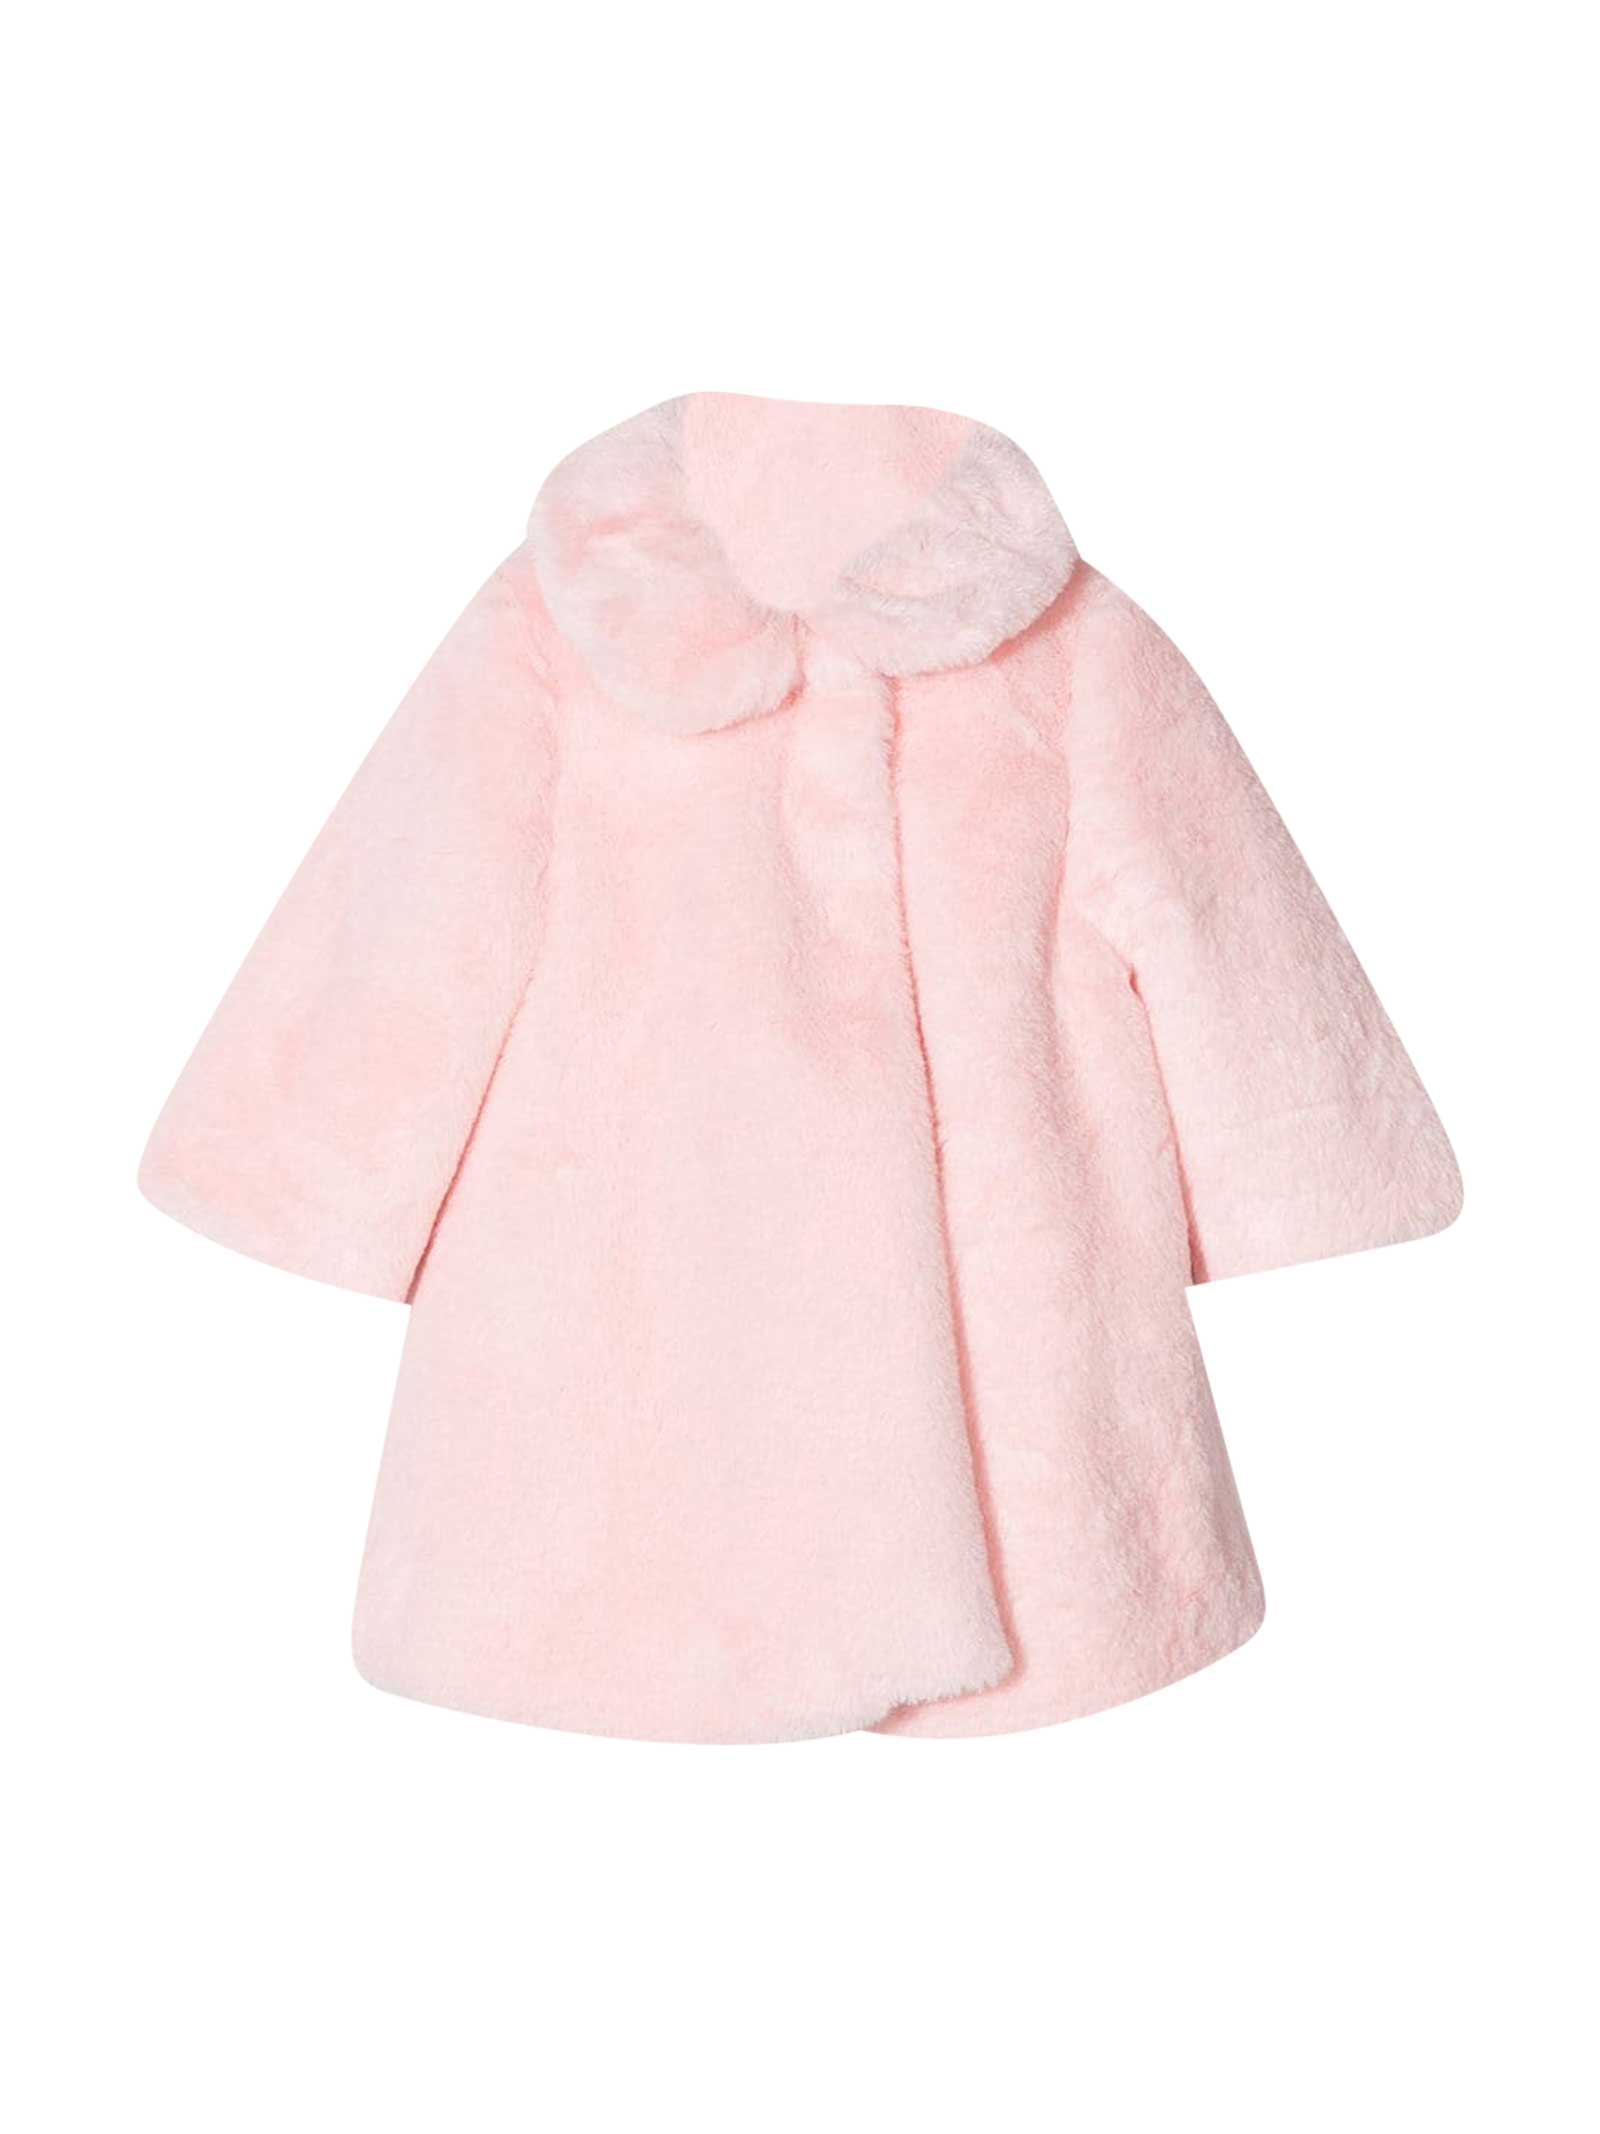 Miss Blumarine Pink Coat